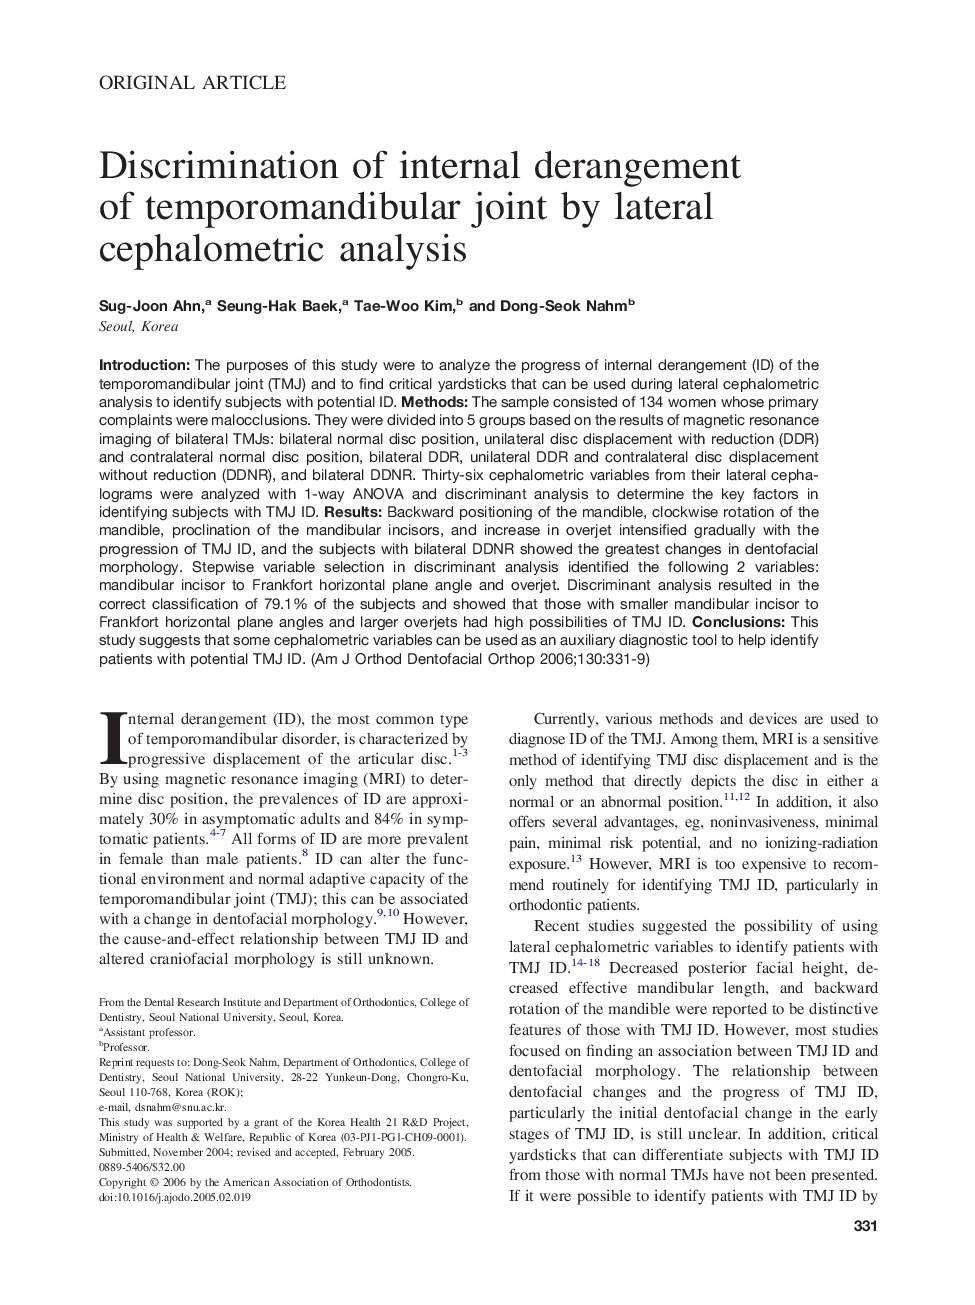 Discrimination of internal derangement of temporomandibular joint by lateral cephalometric analysis 